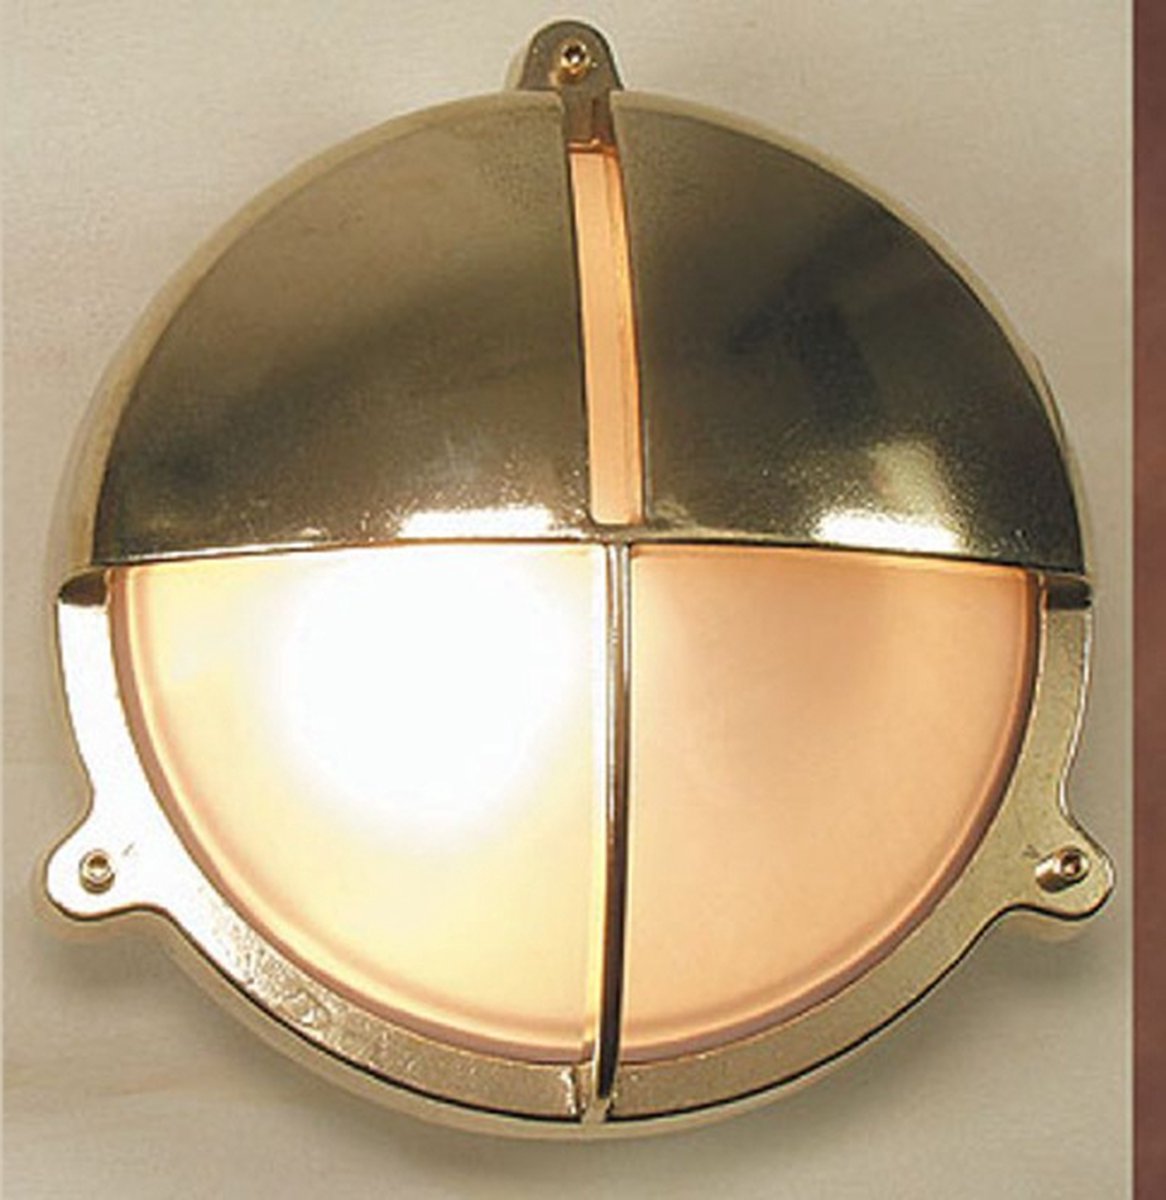 Outlight - Buitenlamp - Scheepslamp Nautic - Messing, helder glas - Outlet